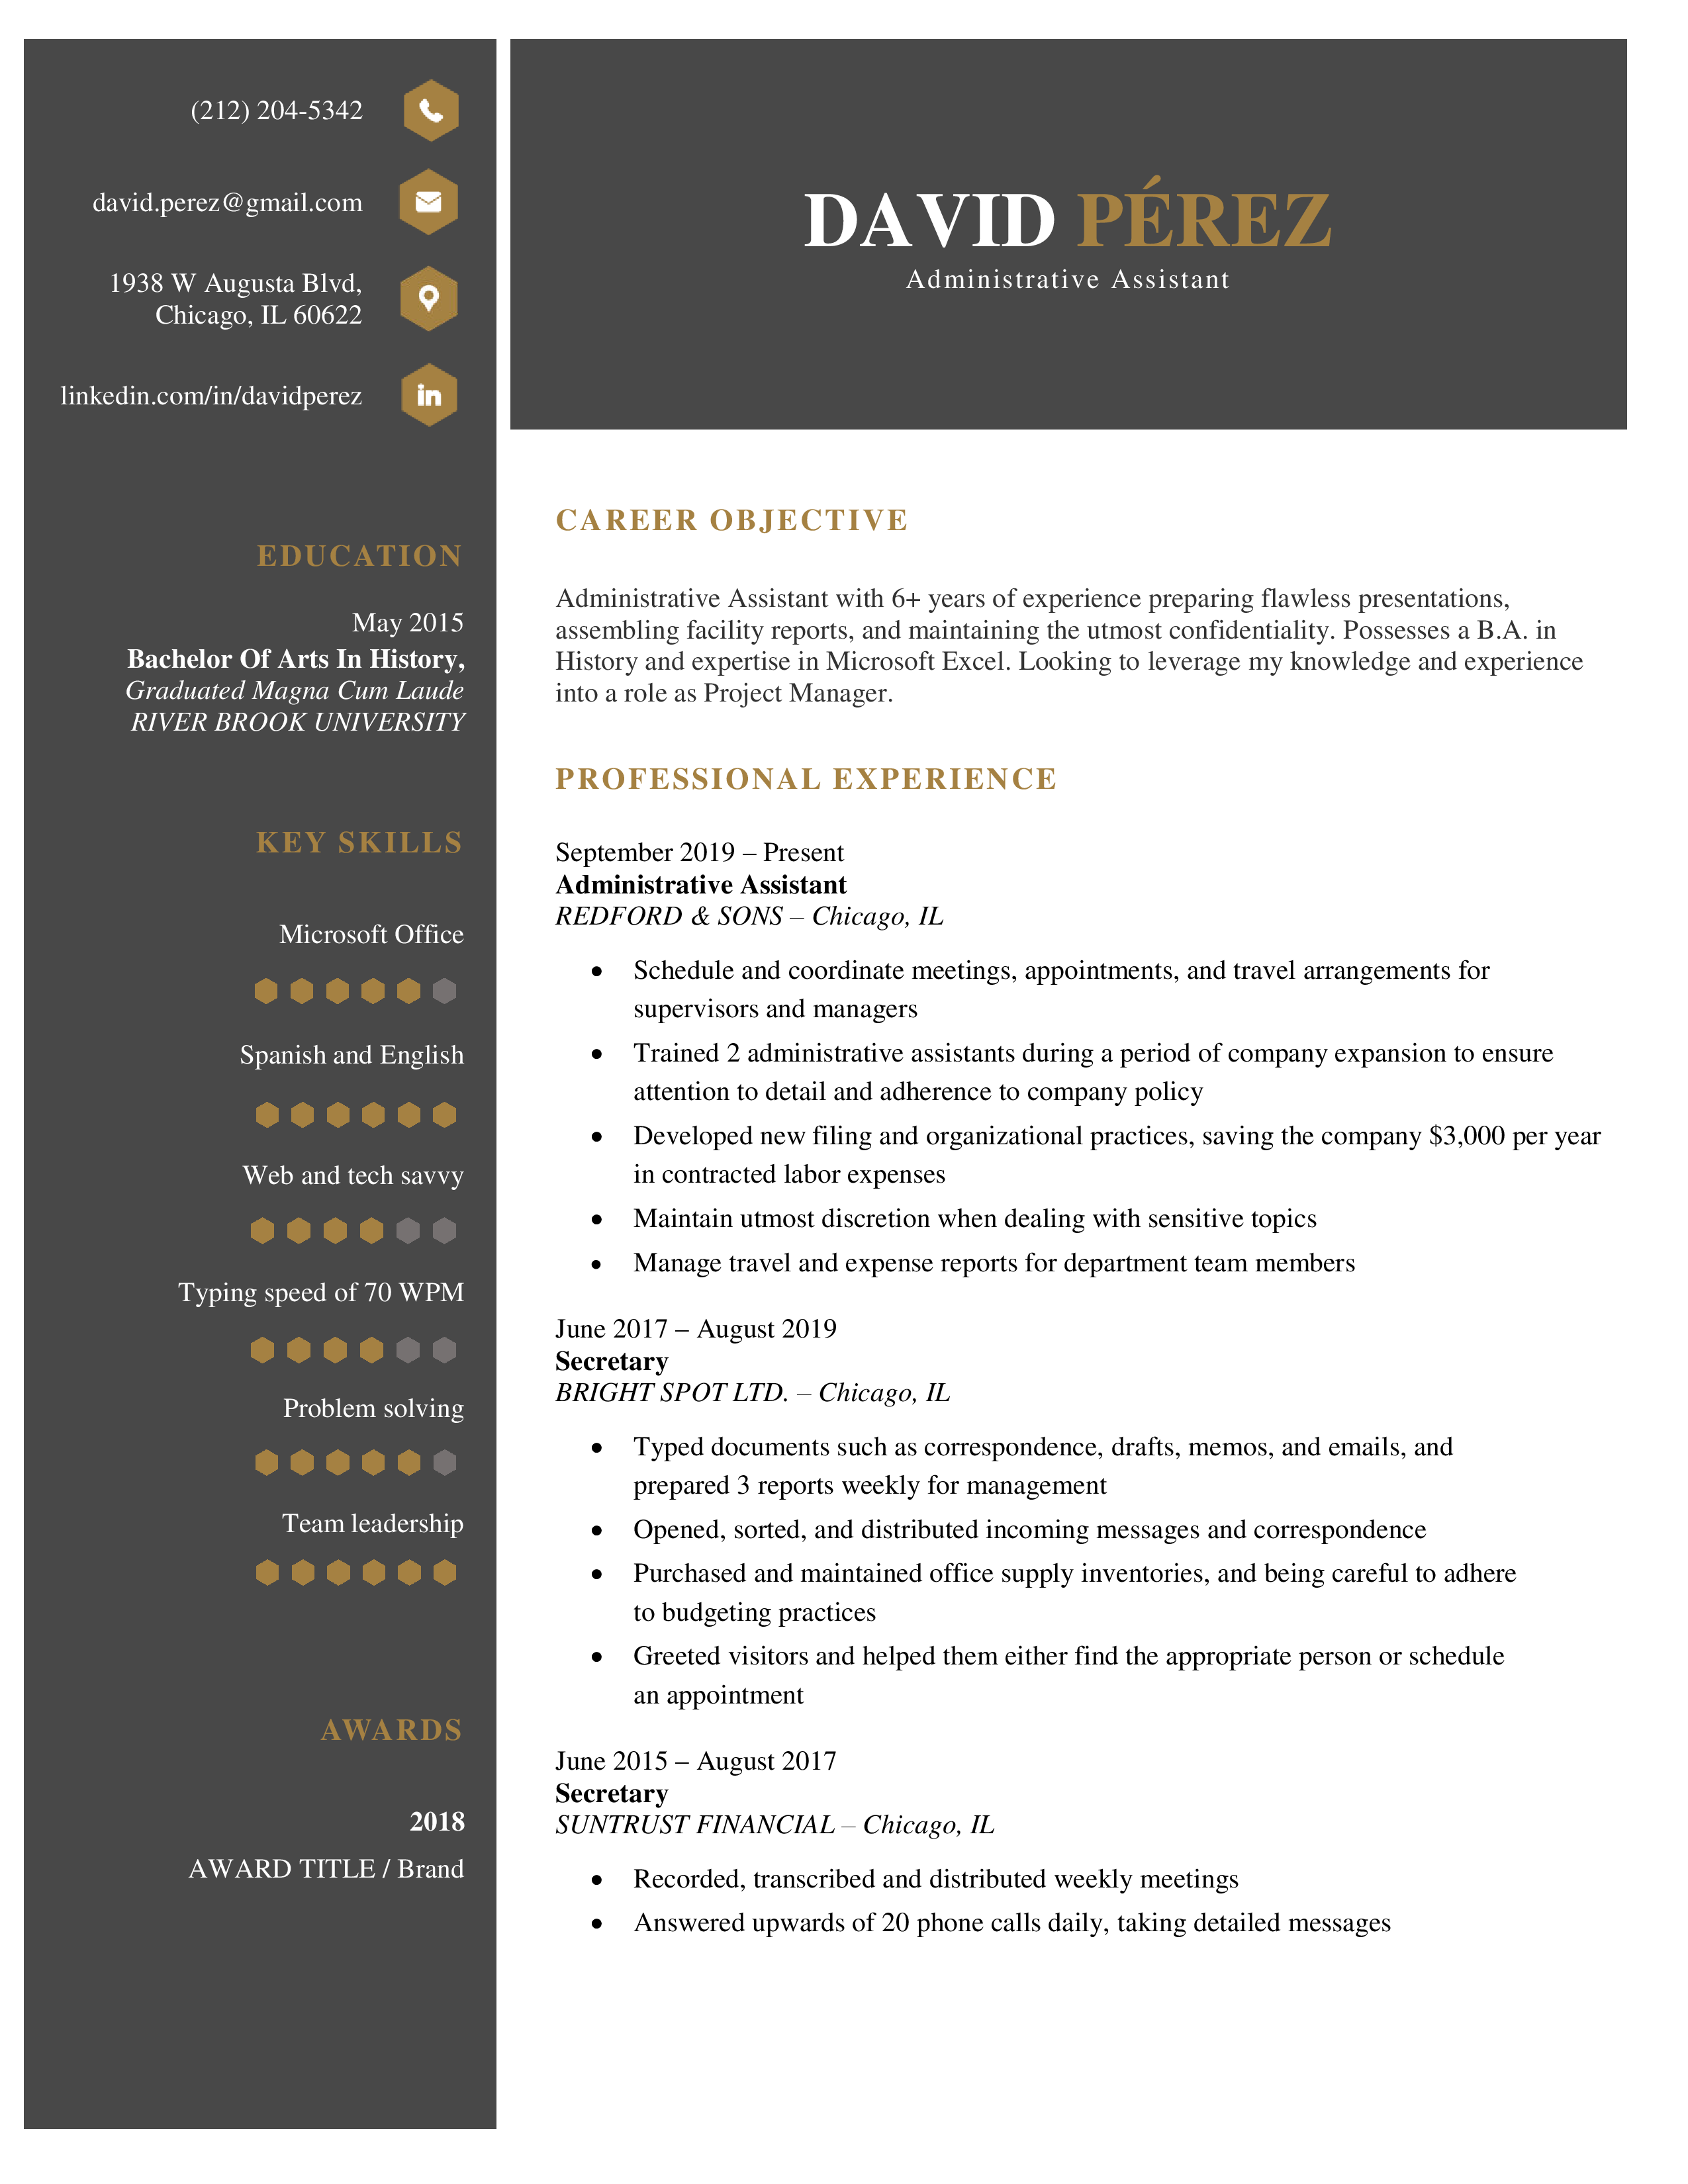 Everest-Resume-Template-Gold_1